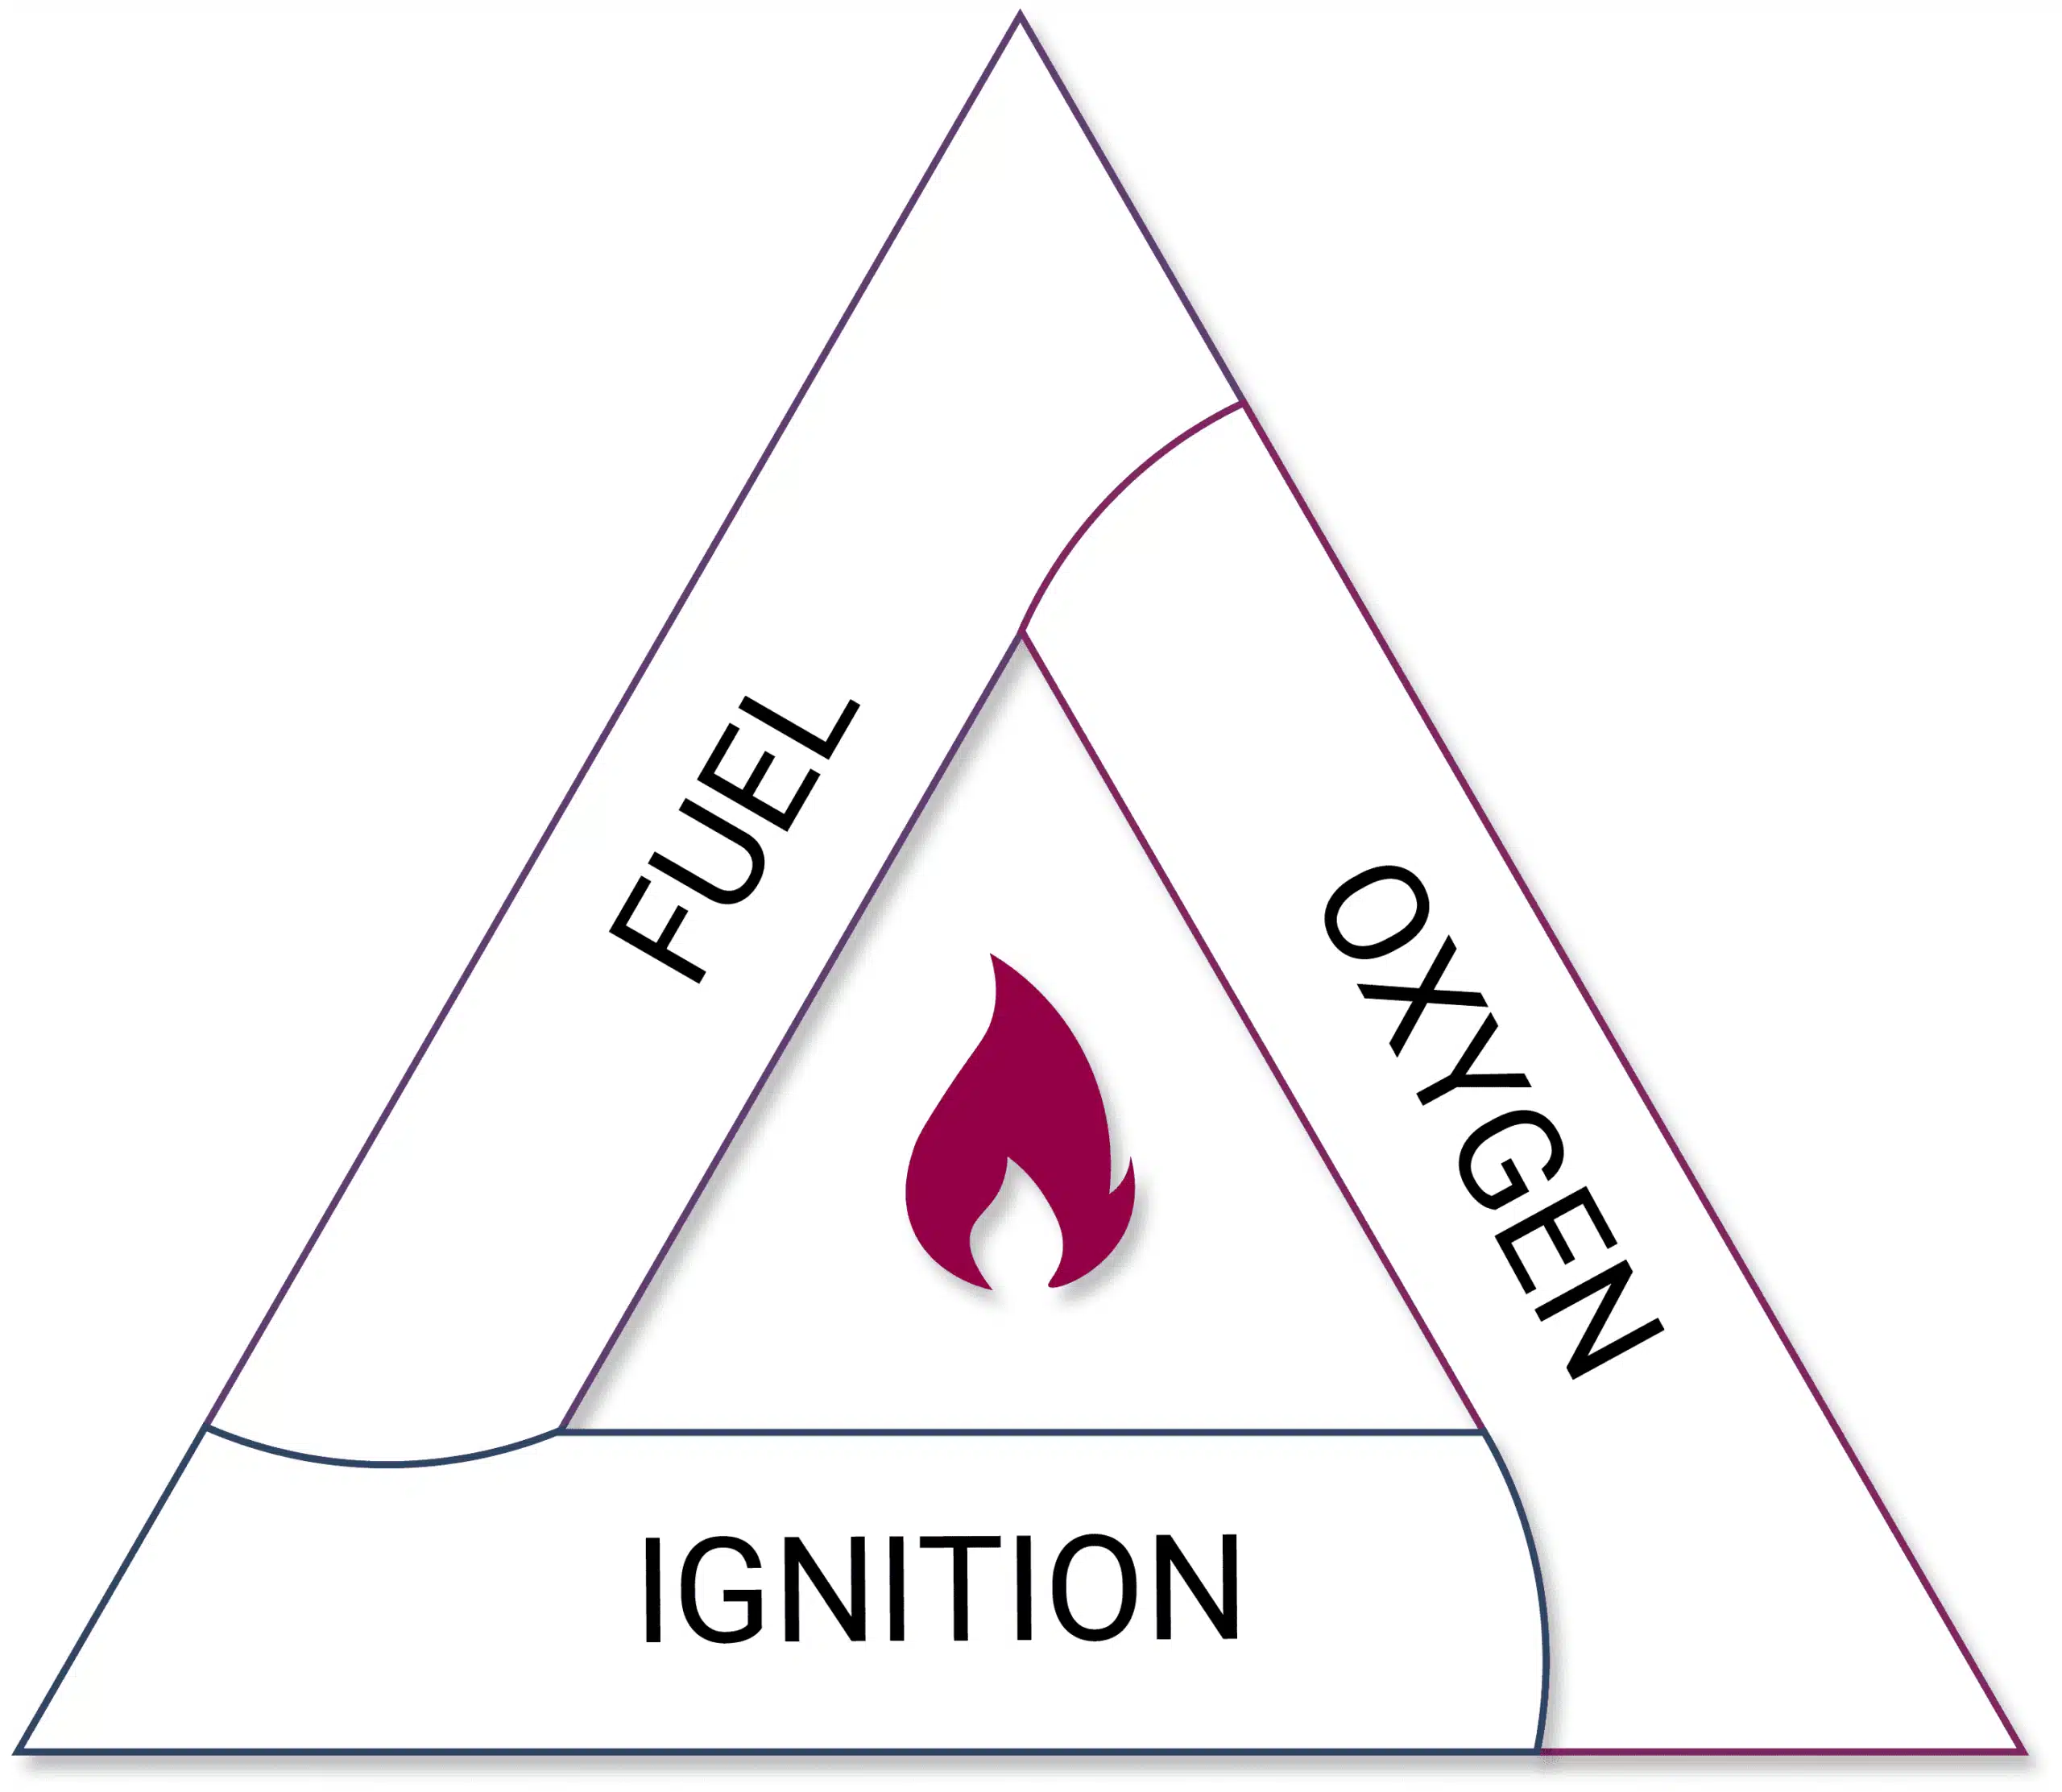 fire-triangle